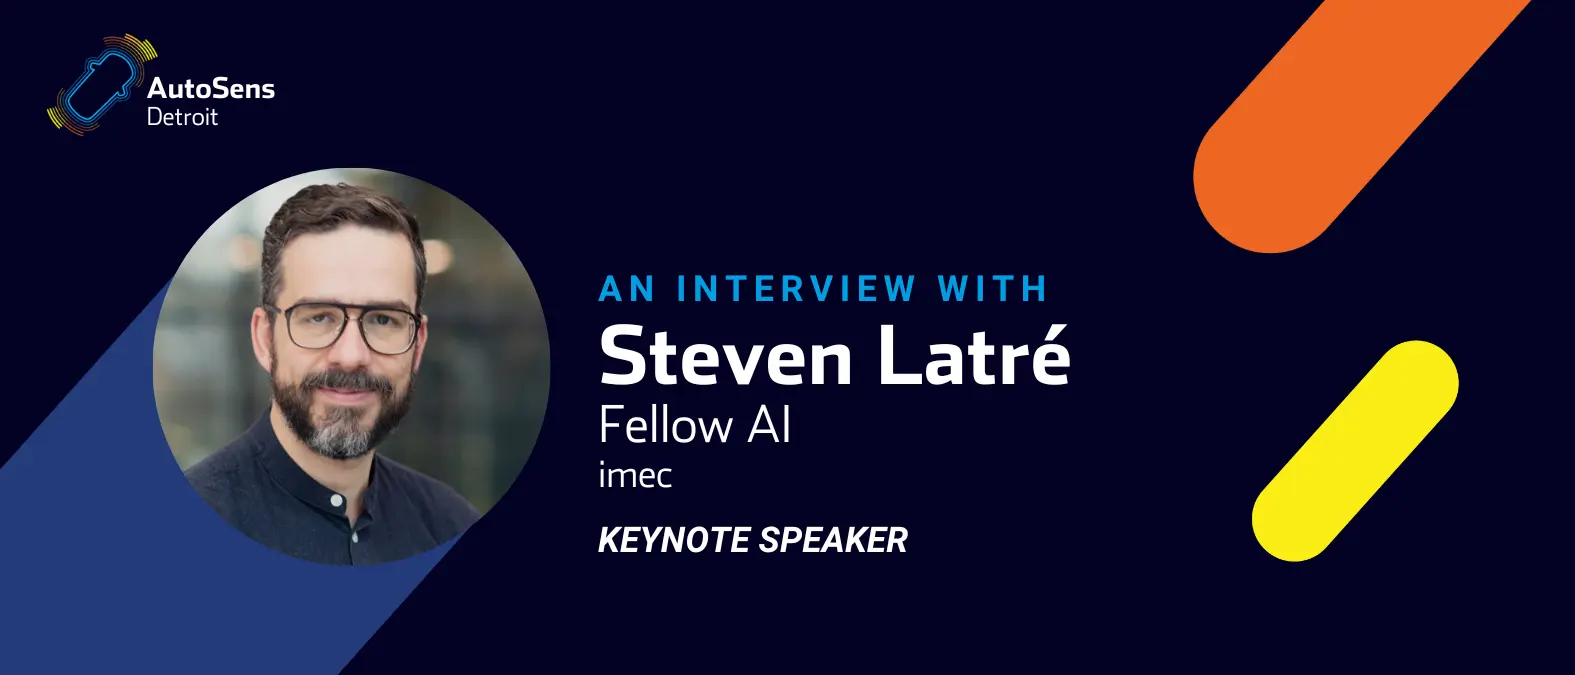 An interview with Steven Latre Fellow AI at Imec